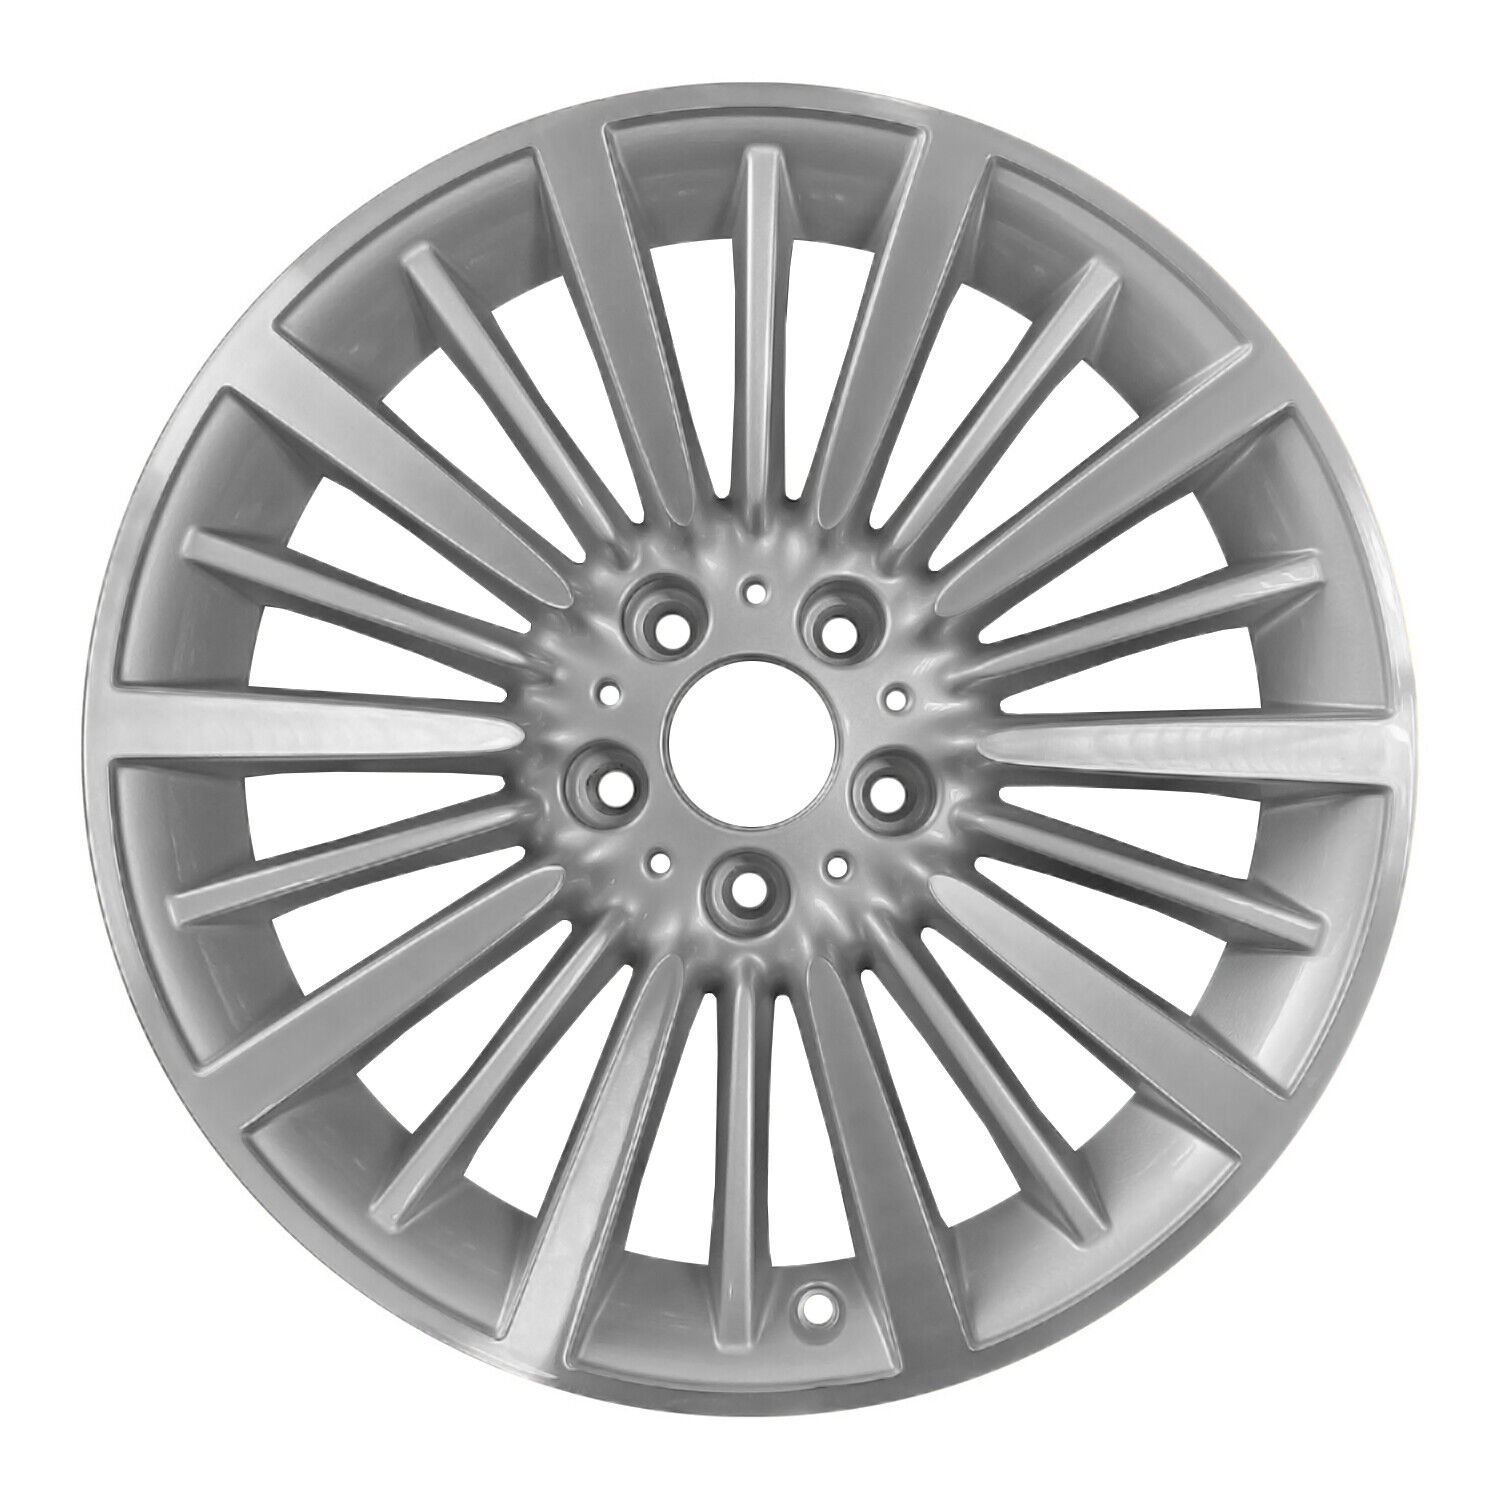 Refurbished Machined Silver Metallic Aluminum Wheel 18 x 8 36116796249